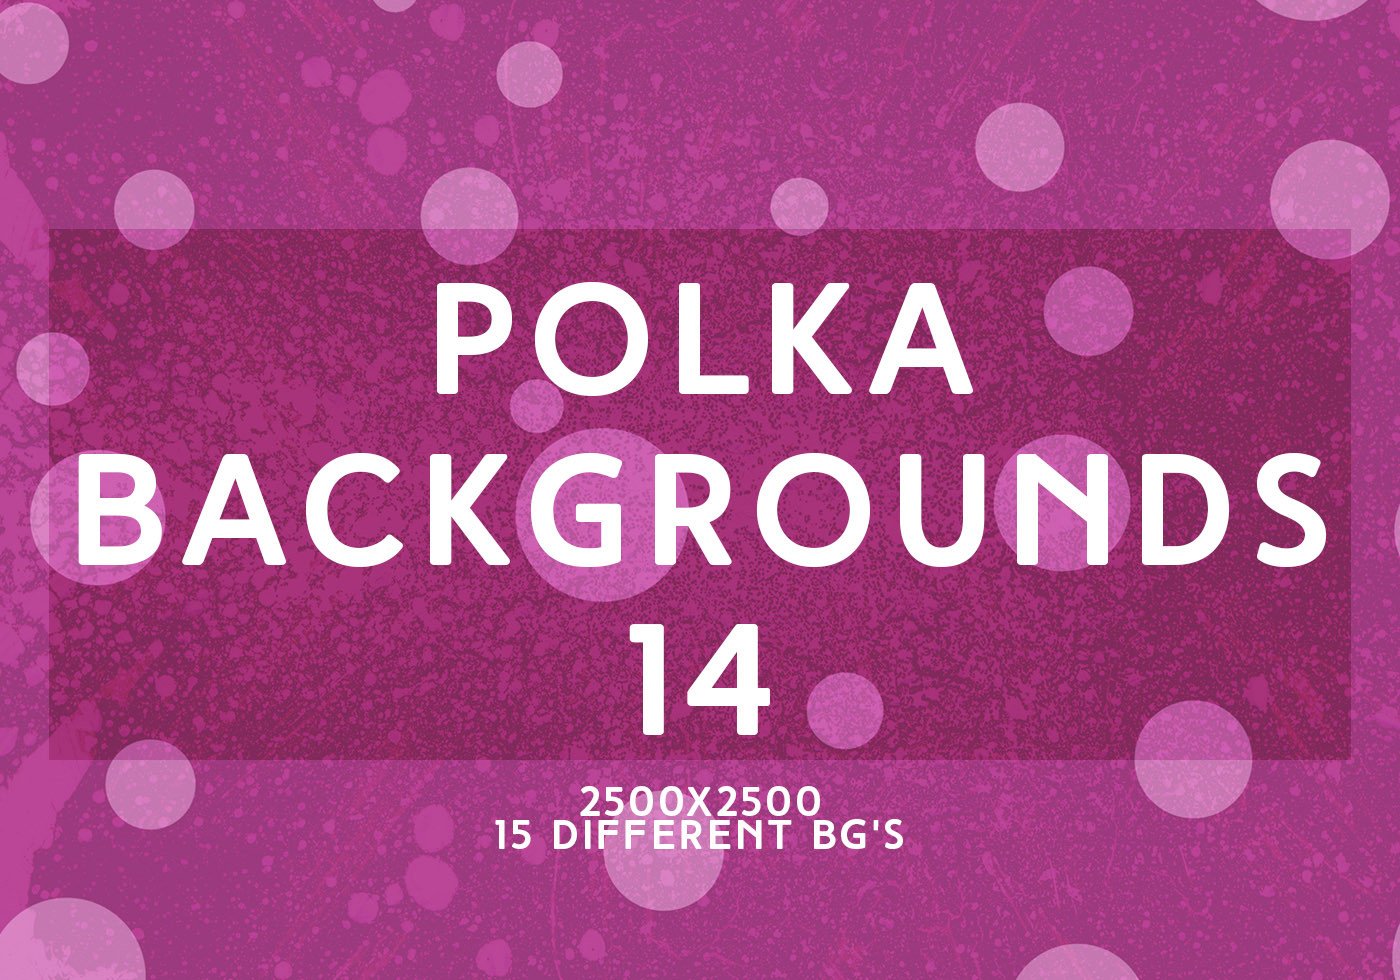 Polka Backgrounds 14 Free shop Brushes at Brusheezy